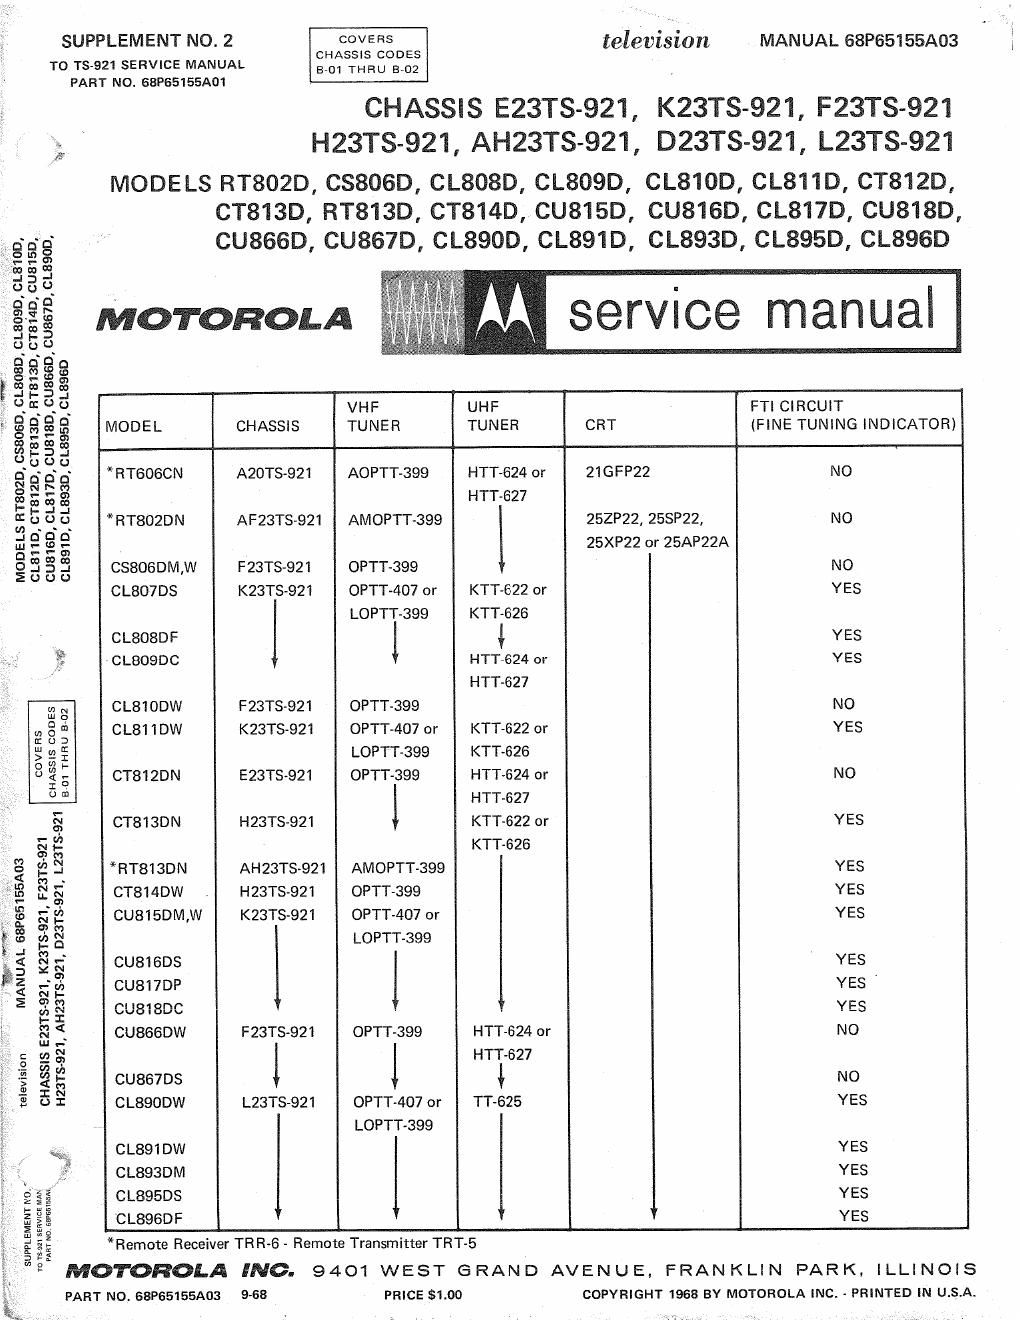 motorola cl 808 d service manual